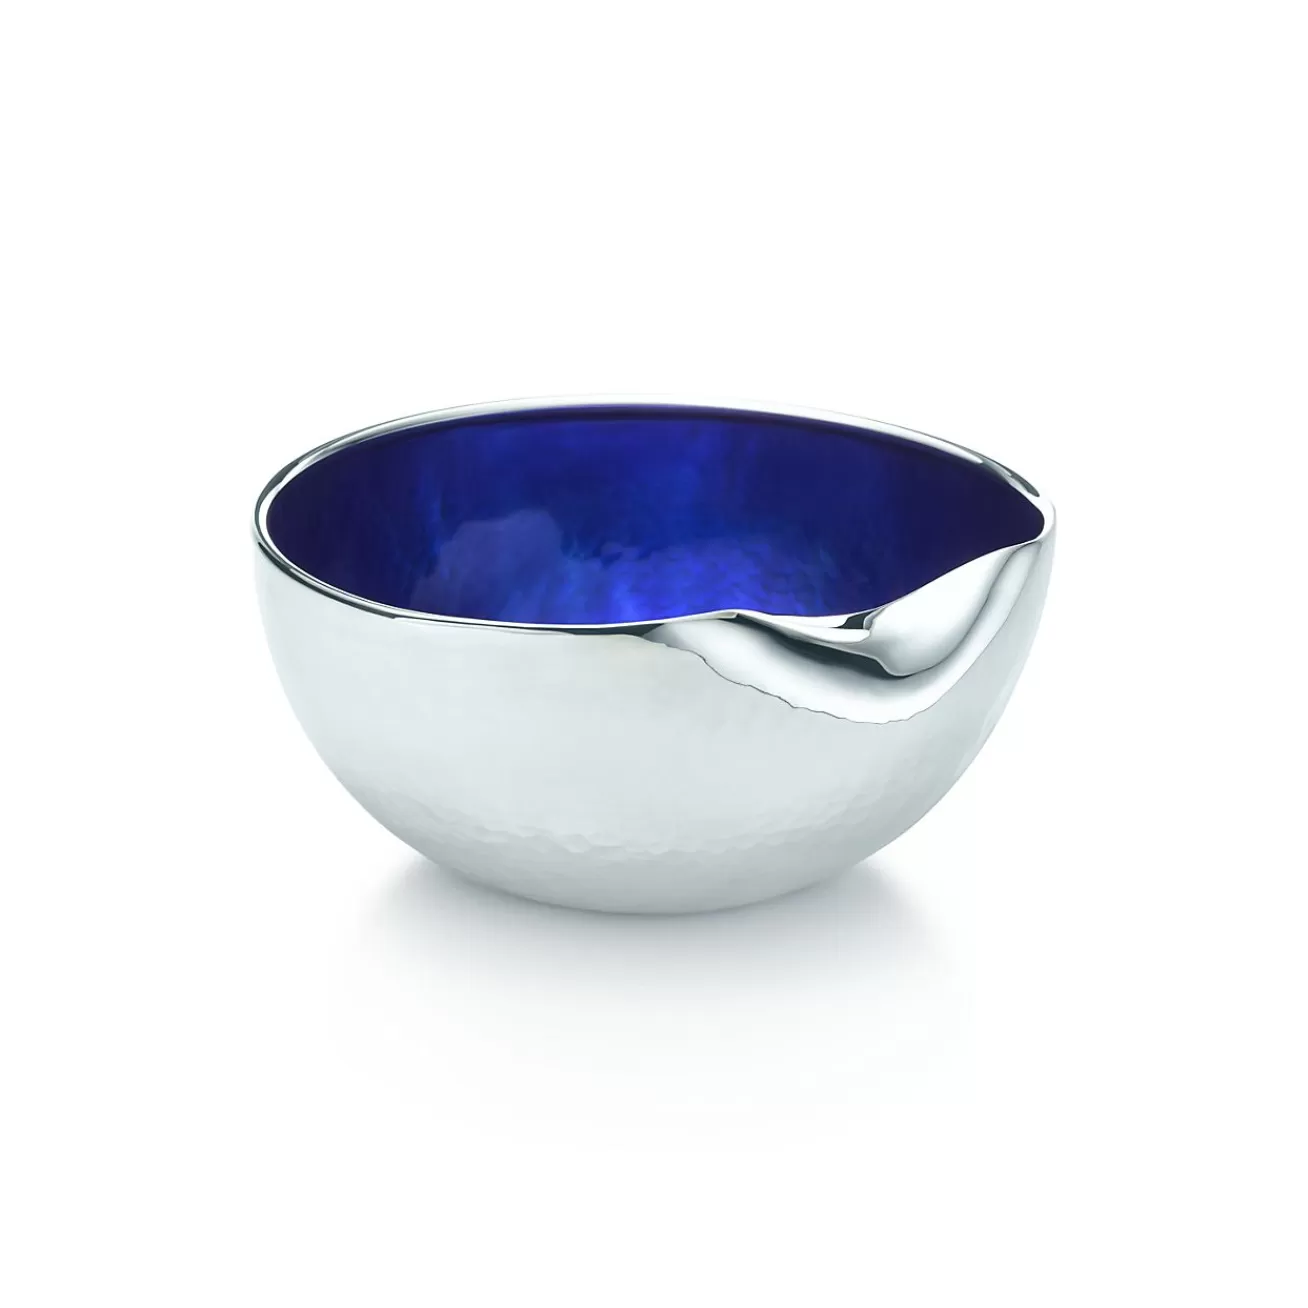 Tiffany & Co. Elsa Peretti® Thumbprint bowl in sterling silver with blue enamel finish. | ^ Elsa Peretti® | The Home